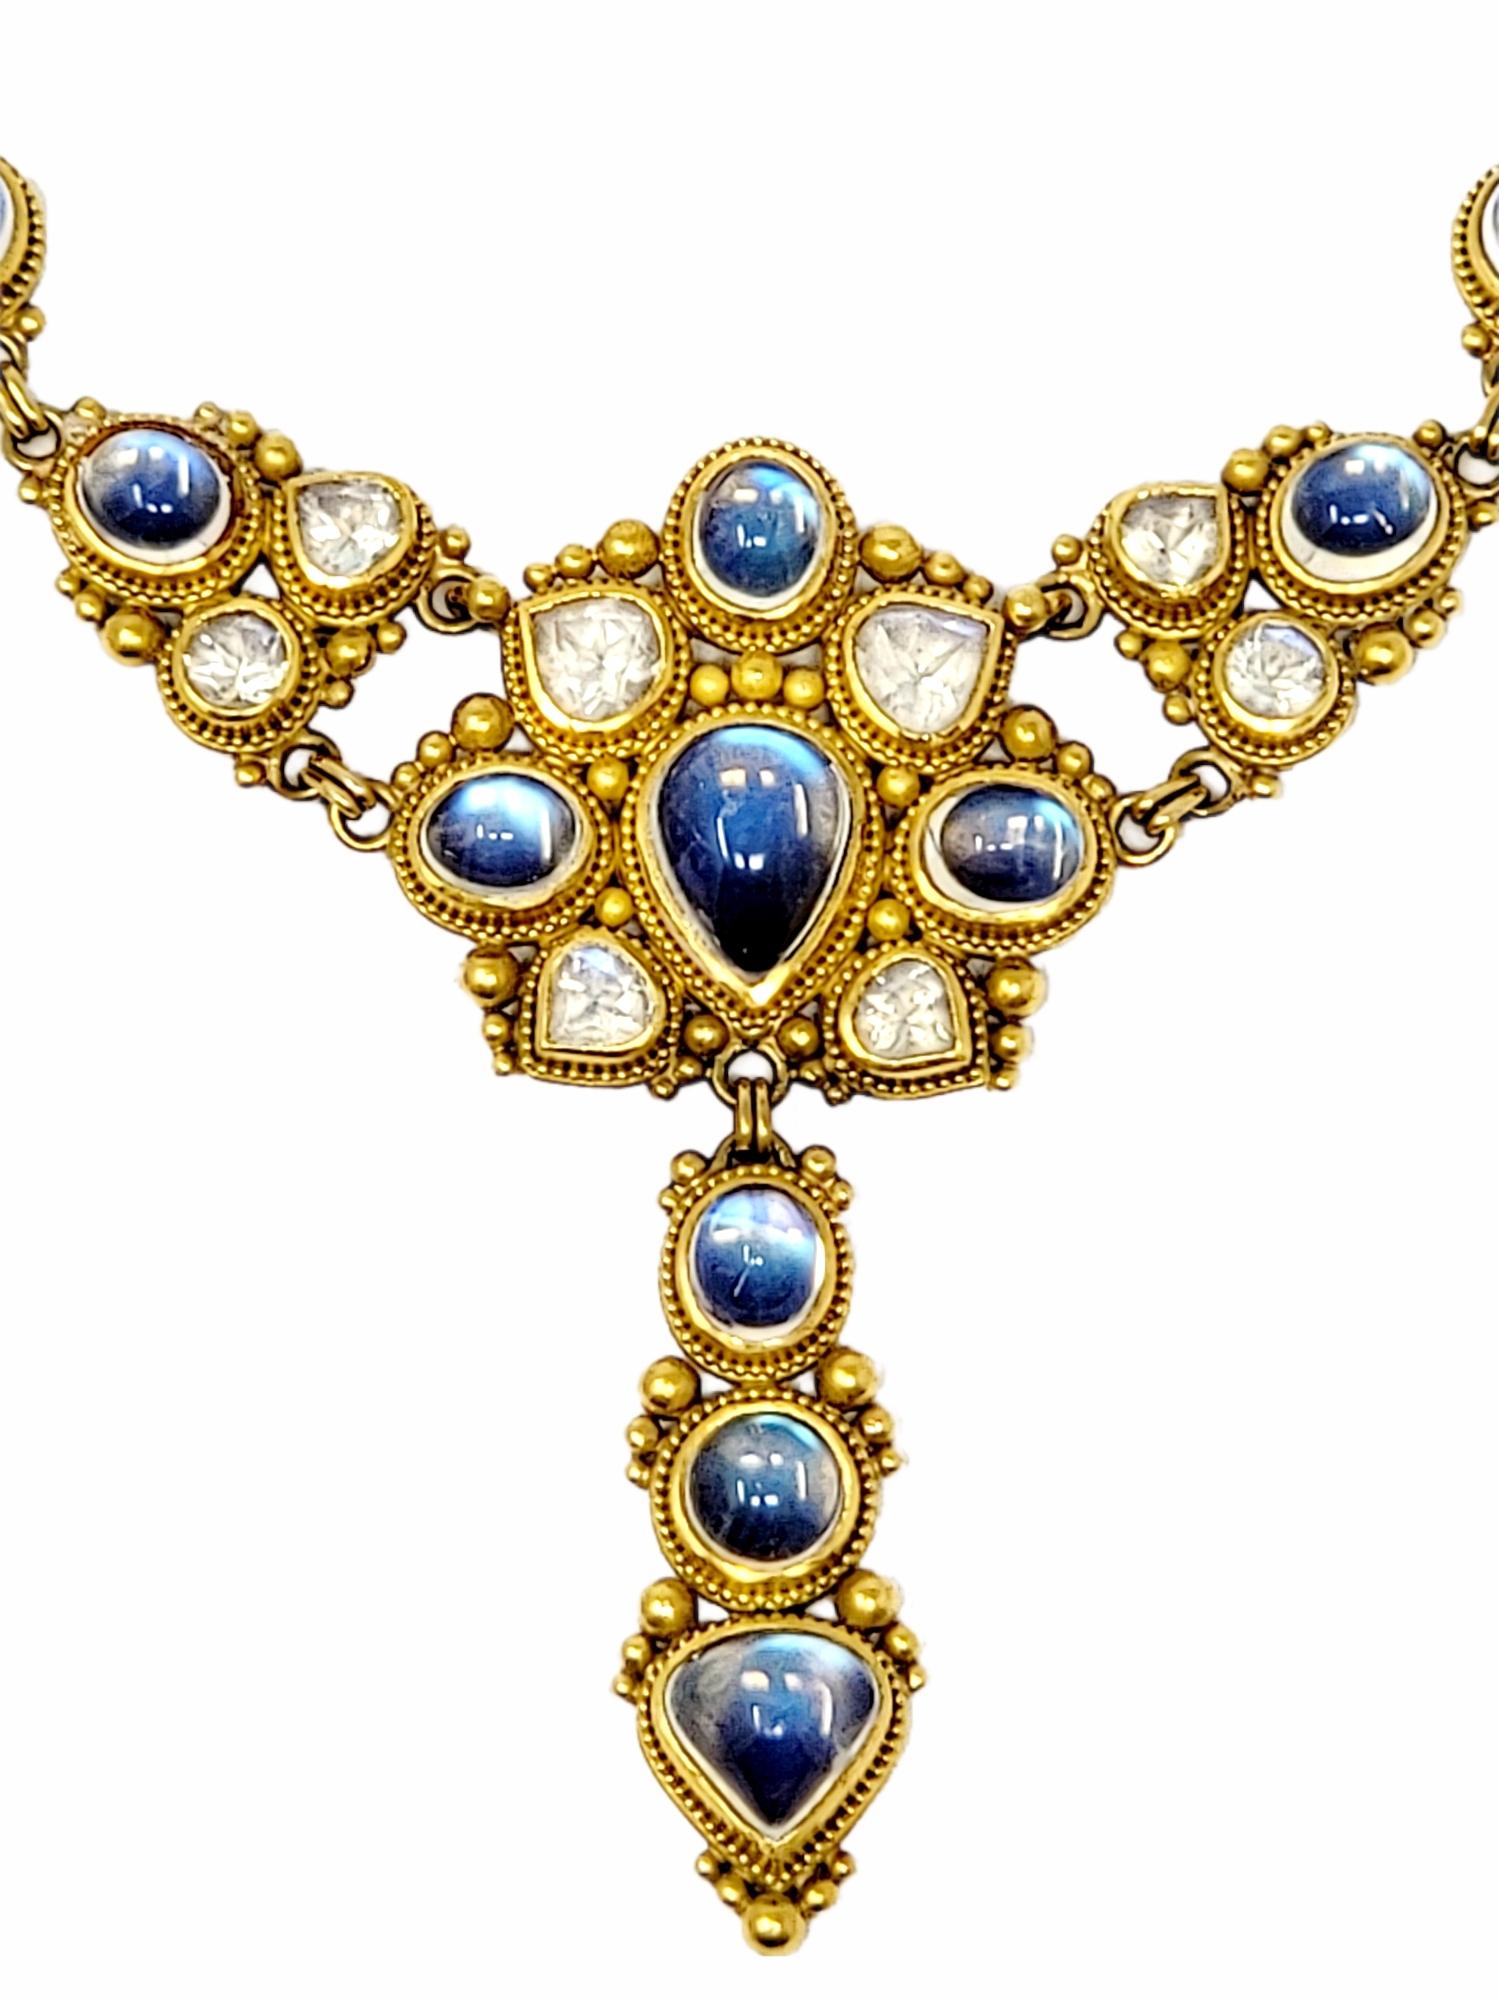 21 karat gold necklace